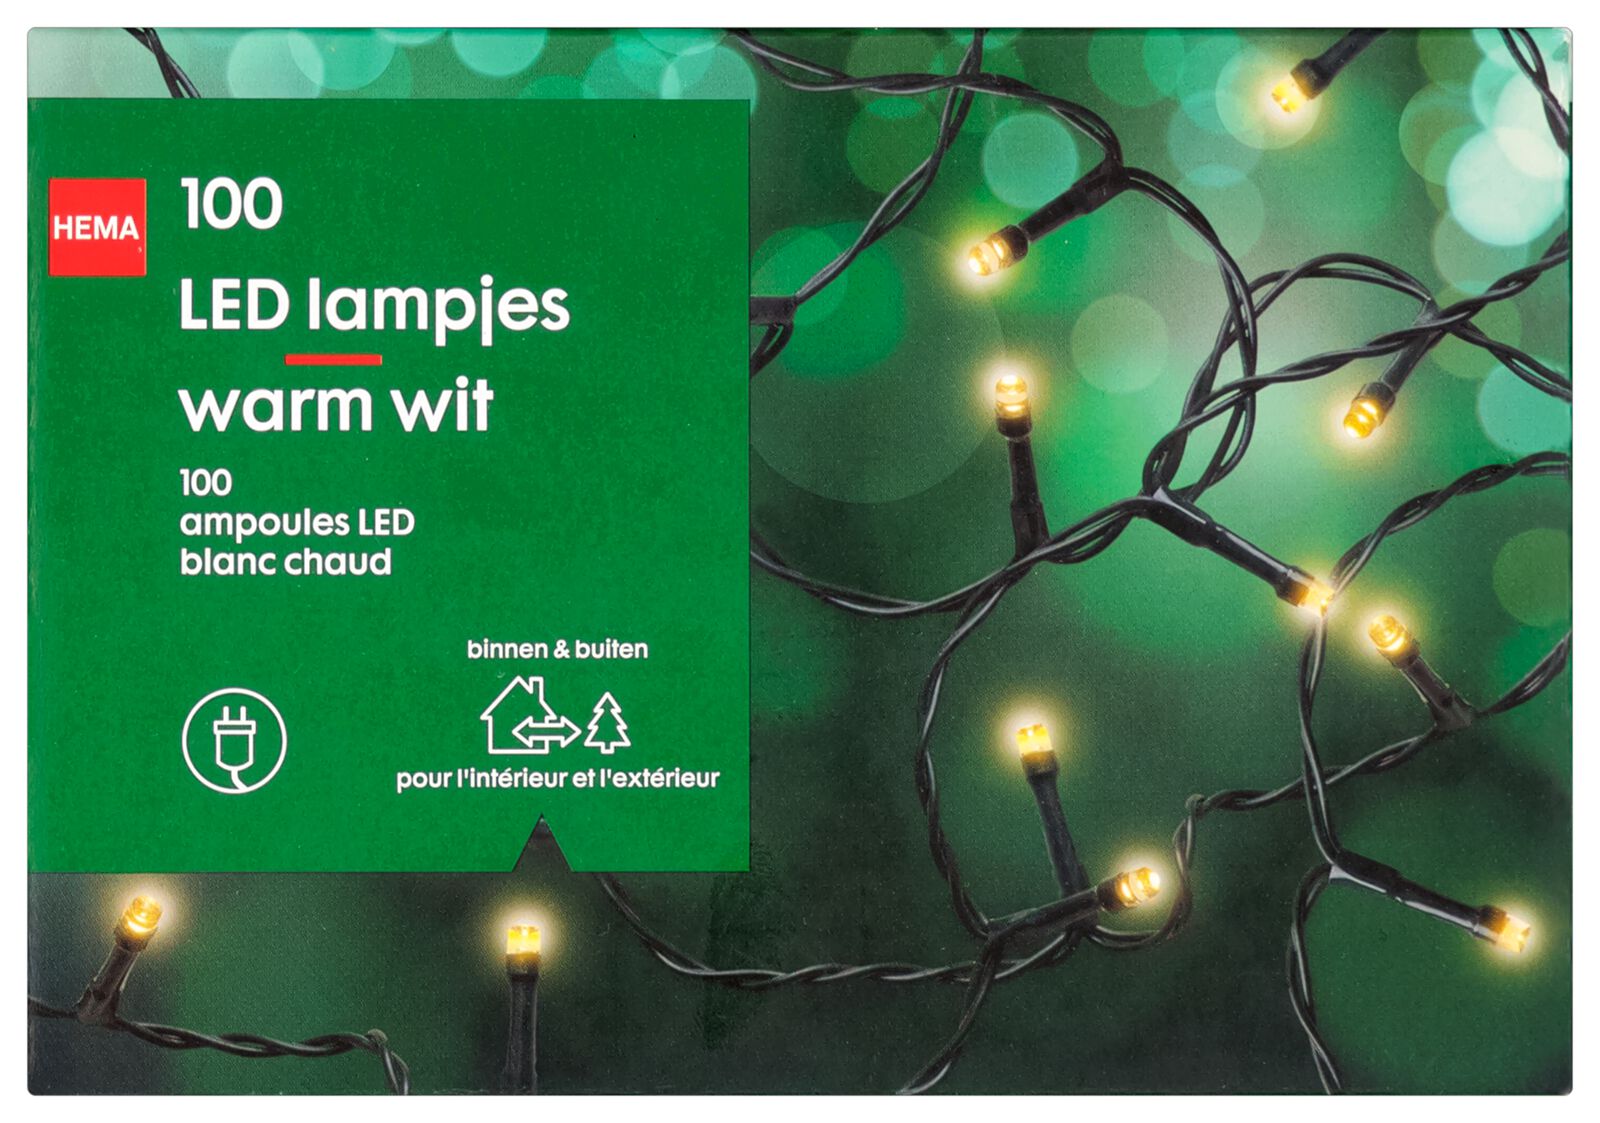 lichtsnoer 100 LED lampjes 12.42m warm wit - HEMA